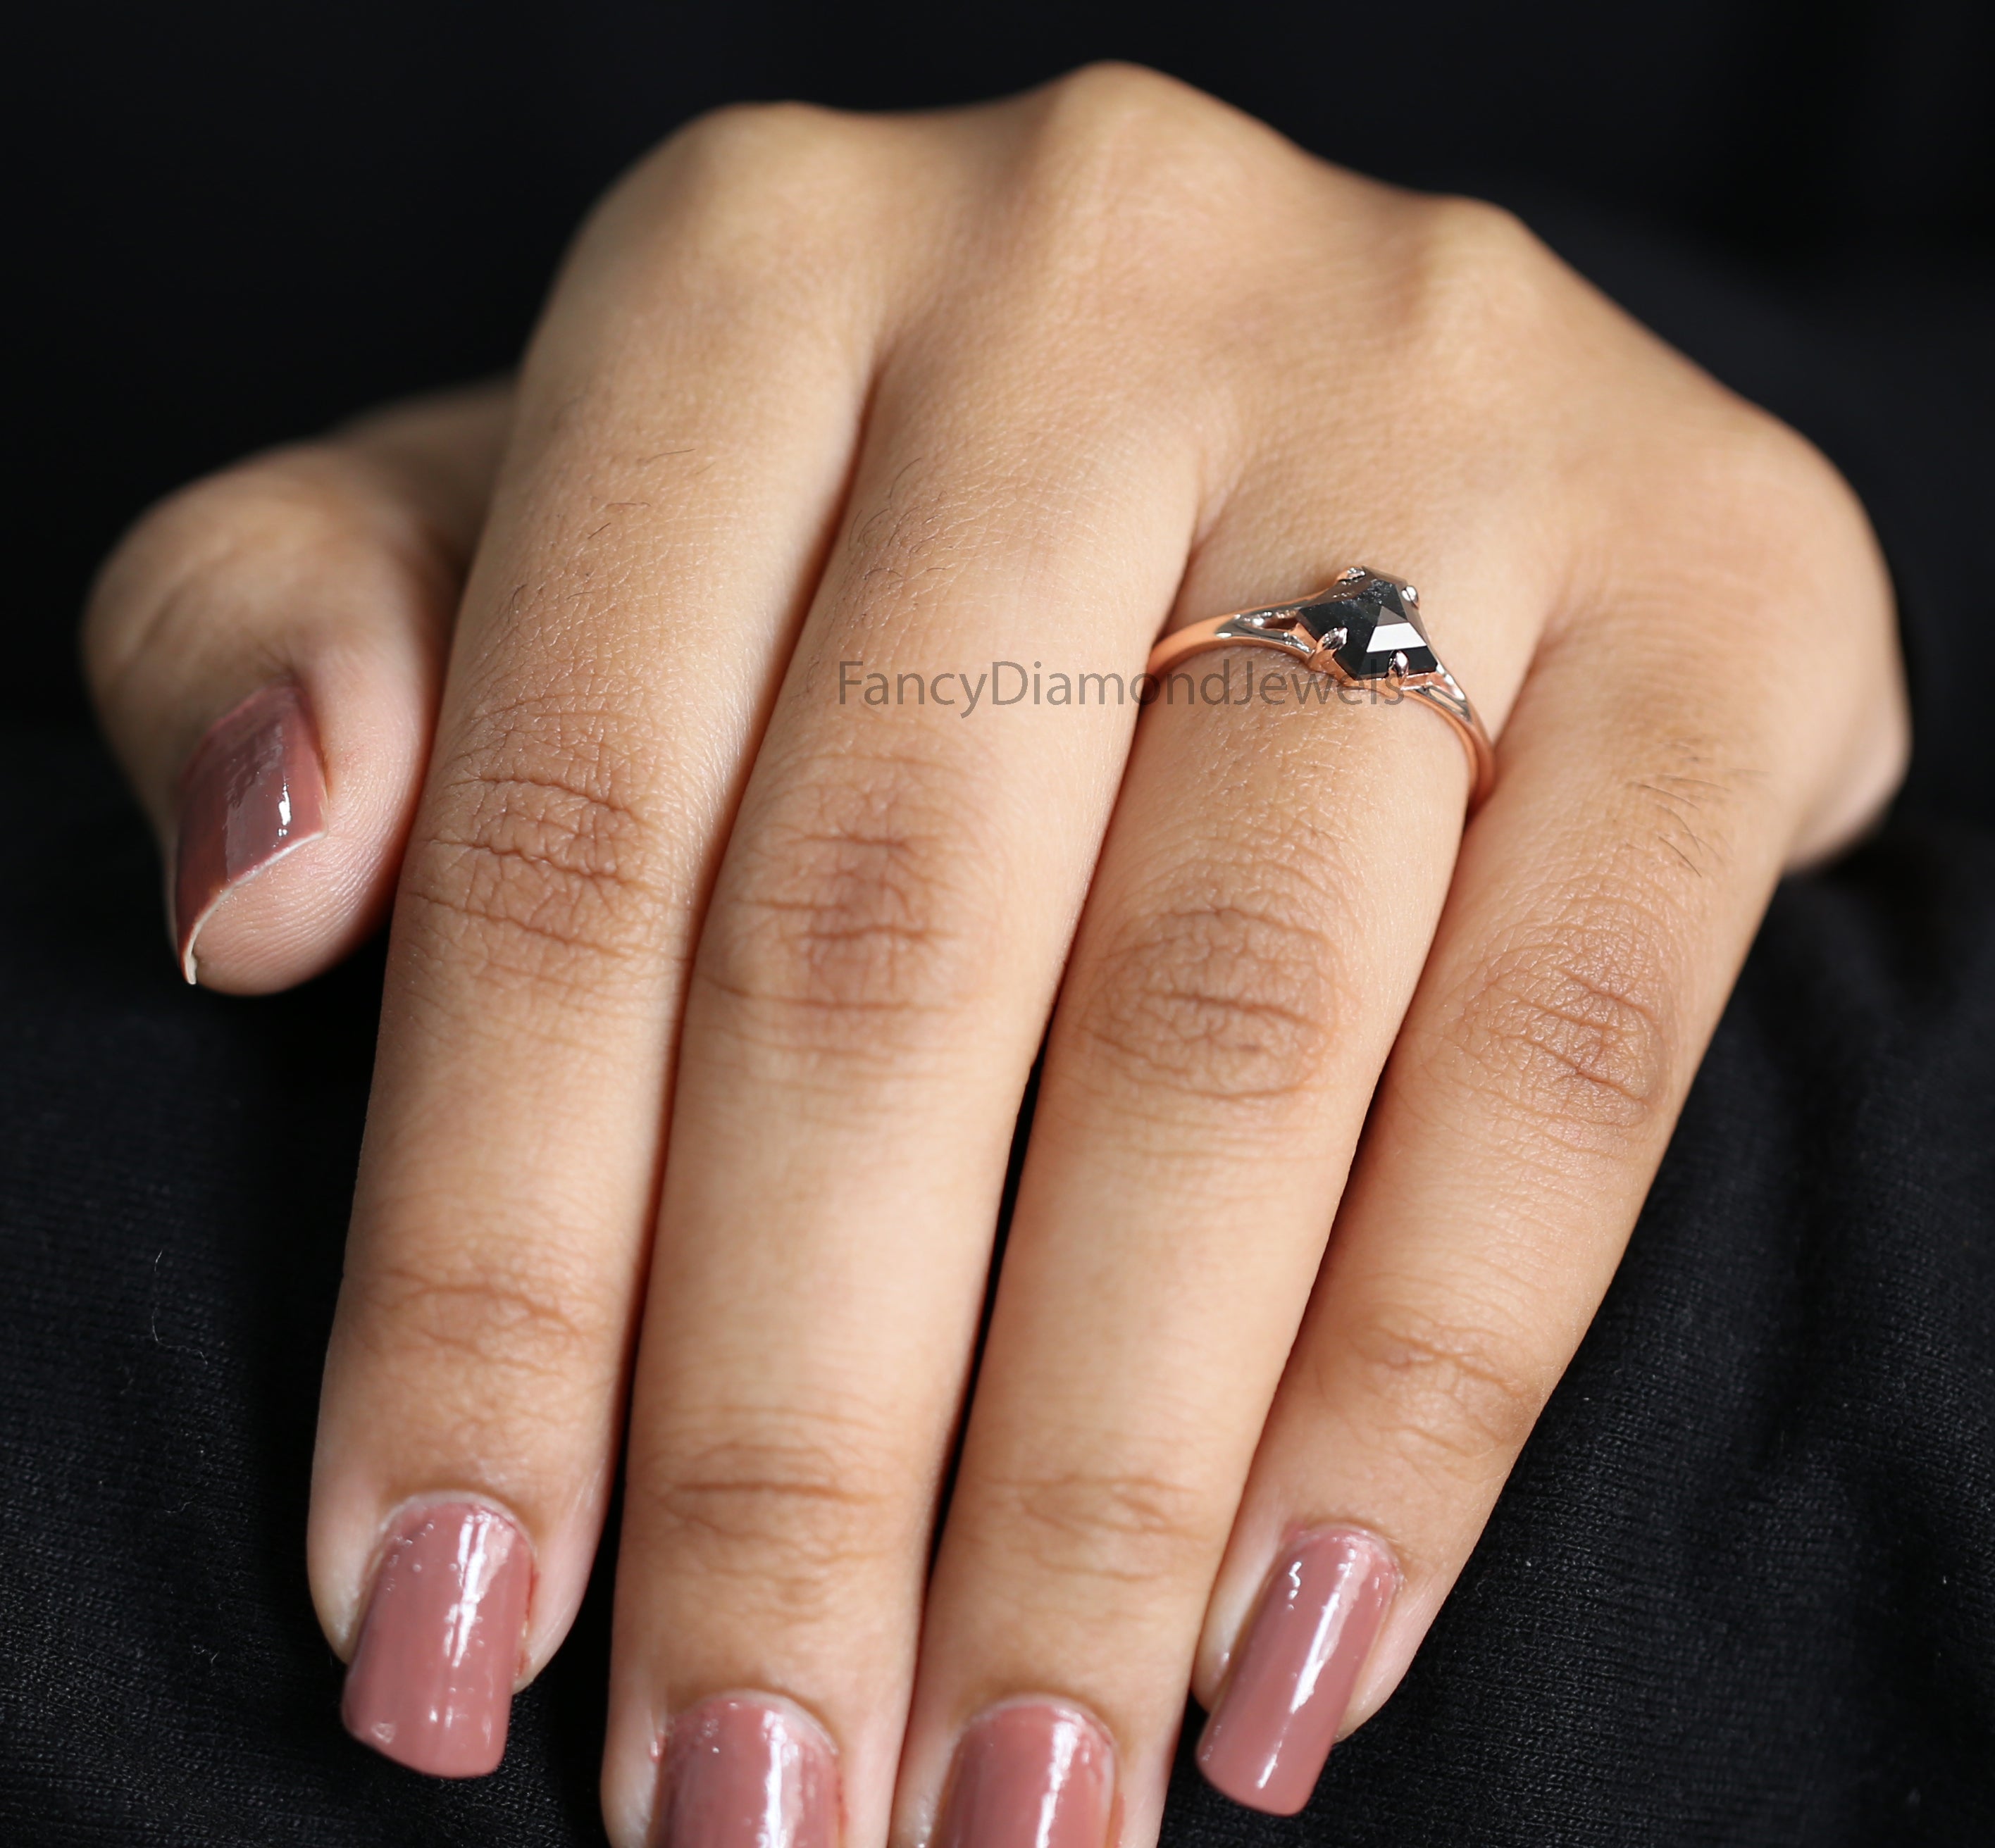 Pentagon Cut Salt And Pepper Diamond Ring 0.64 Ct 6.50 MM Pentagon Diamond Ring 14K Rose Gold Silver Engagement Ring Gift For Her QL1356